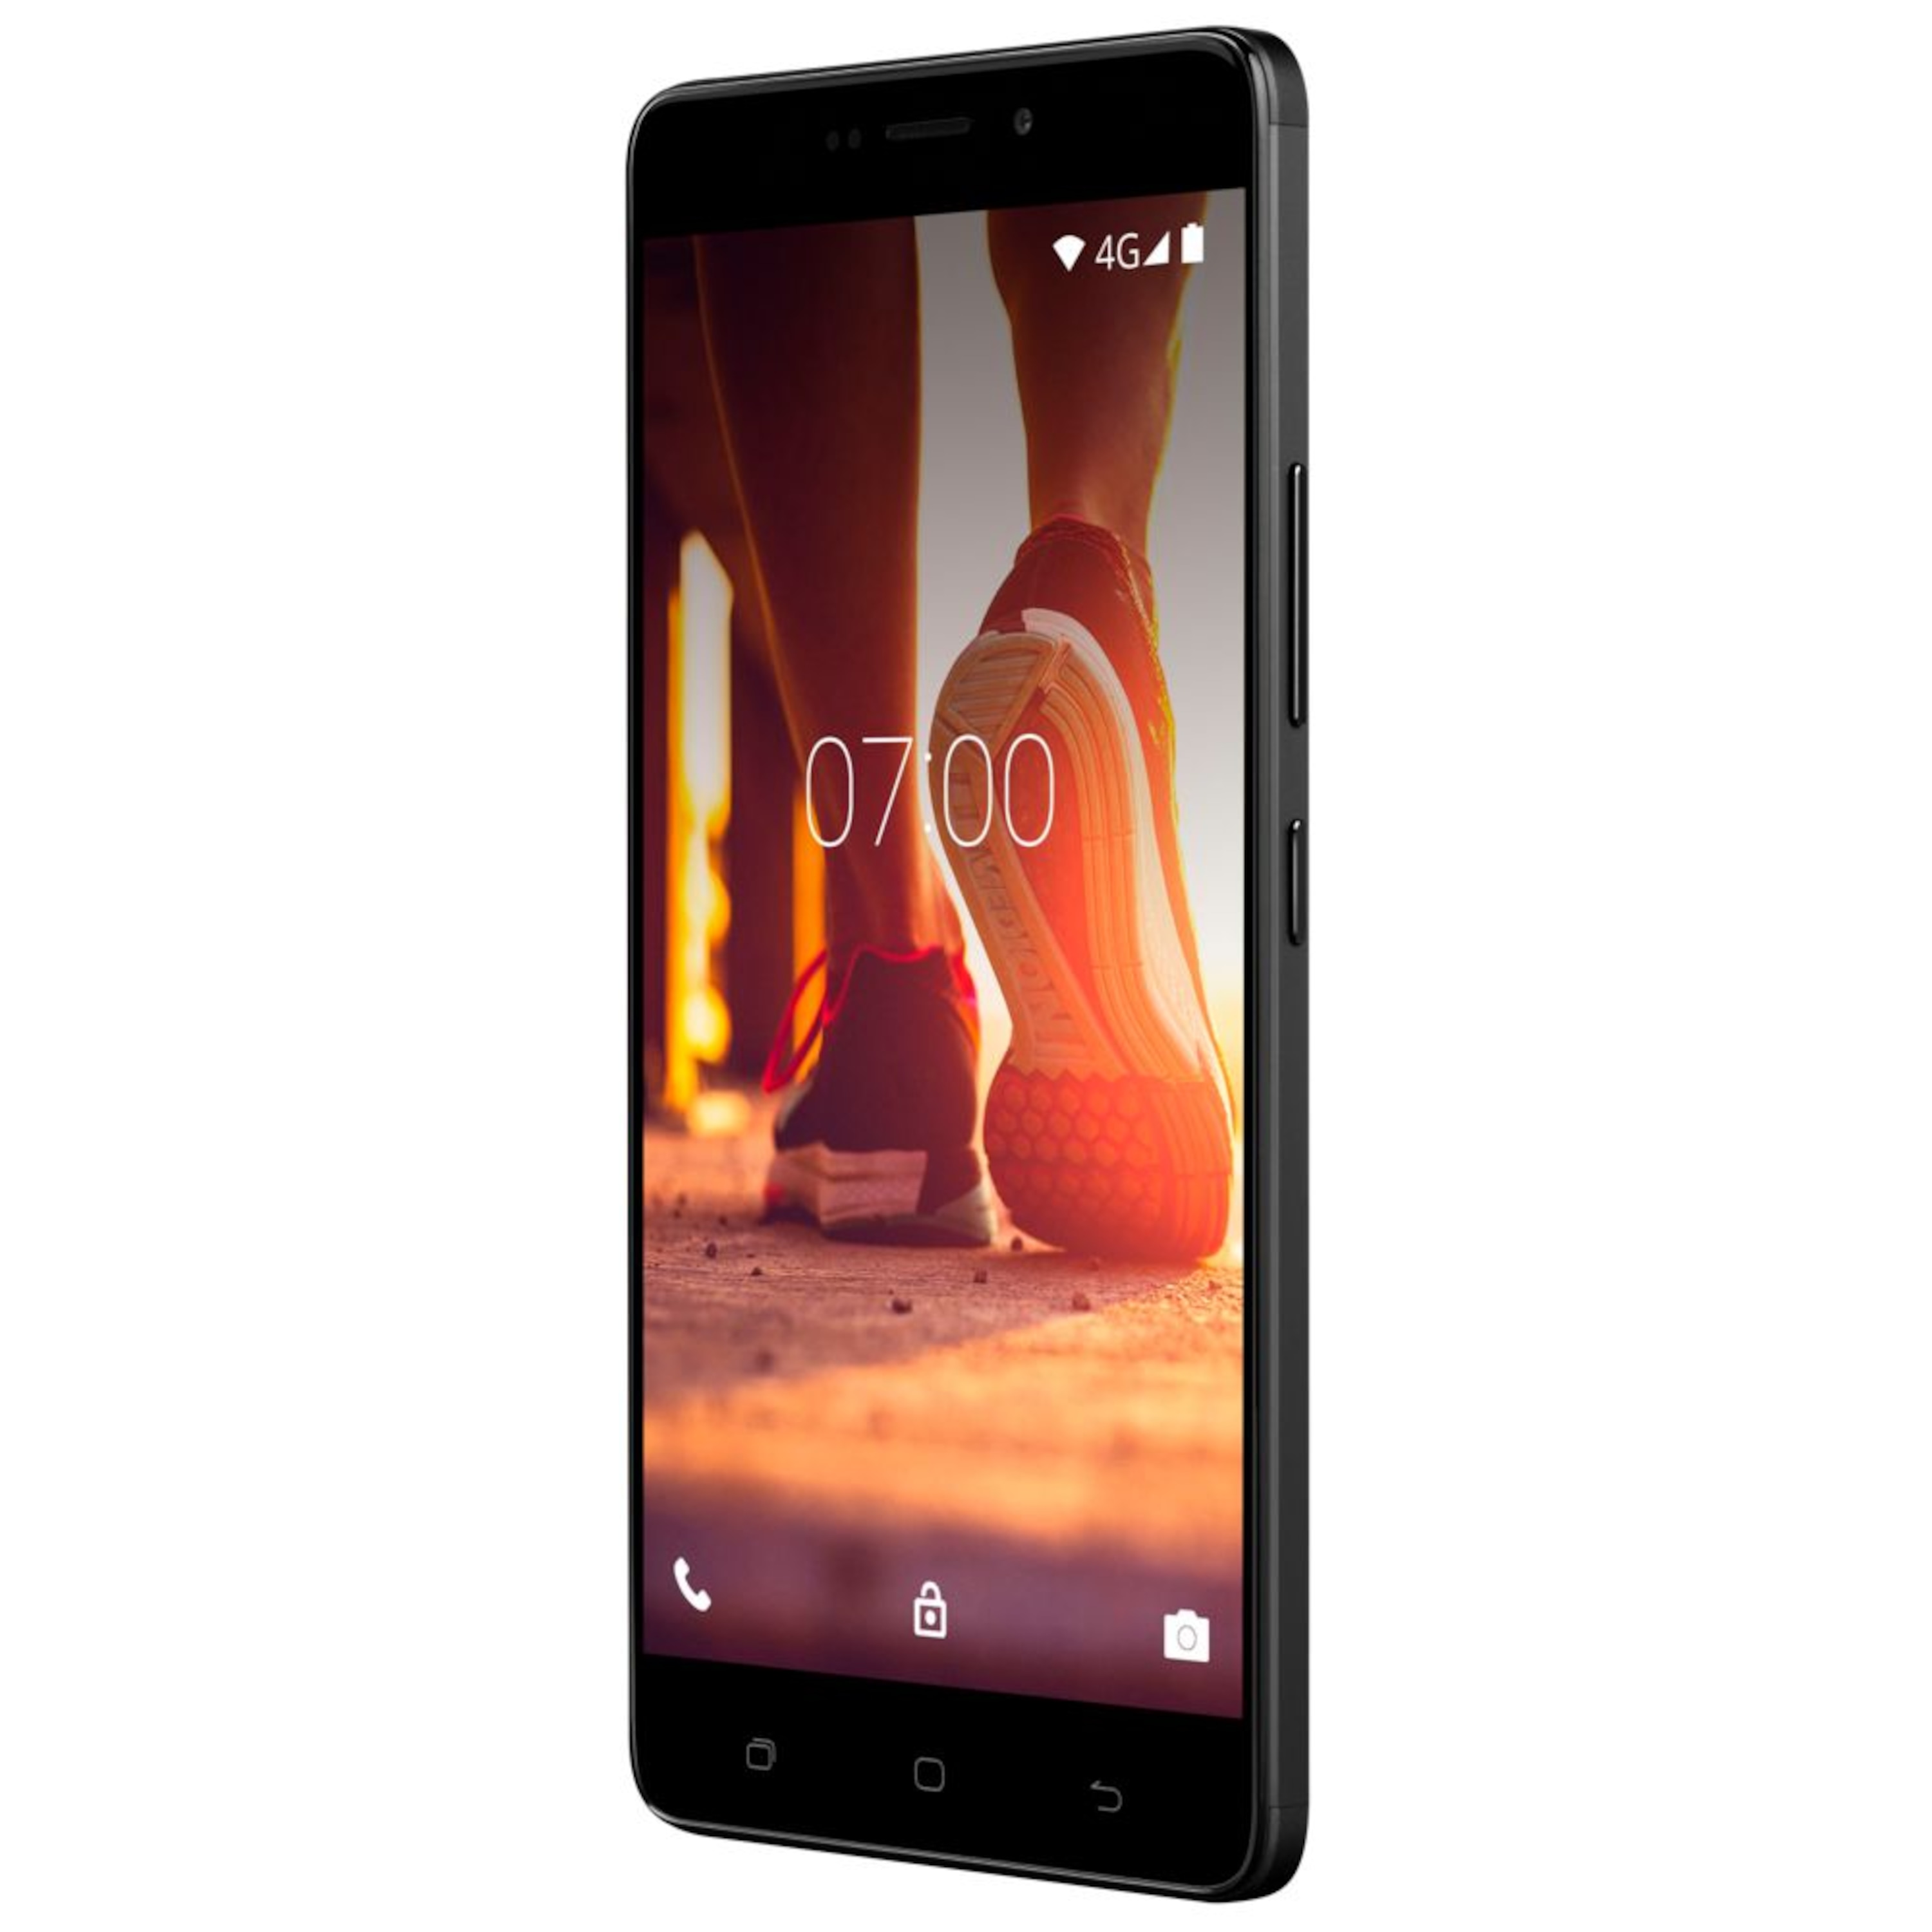 MEDION® LIFE® X5520 Smartphone, 13,97 cm (5,5'') Full-HD Display, Android™ 6.0, 64 GB Speicher, Octa-Core-Prozessor